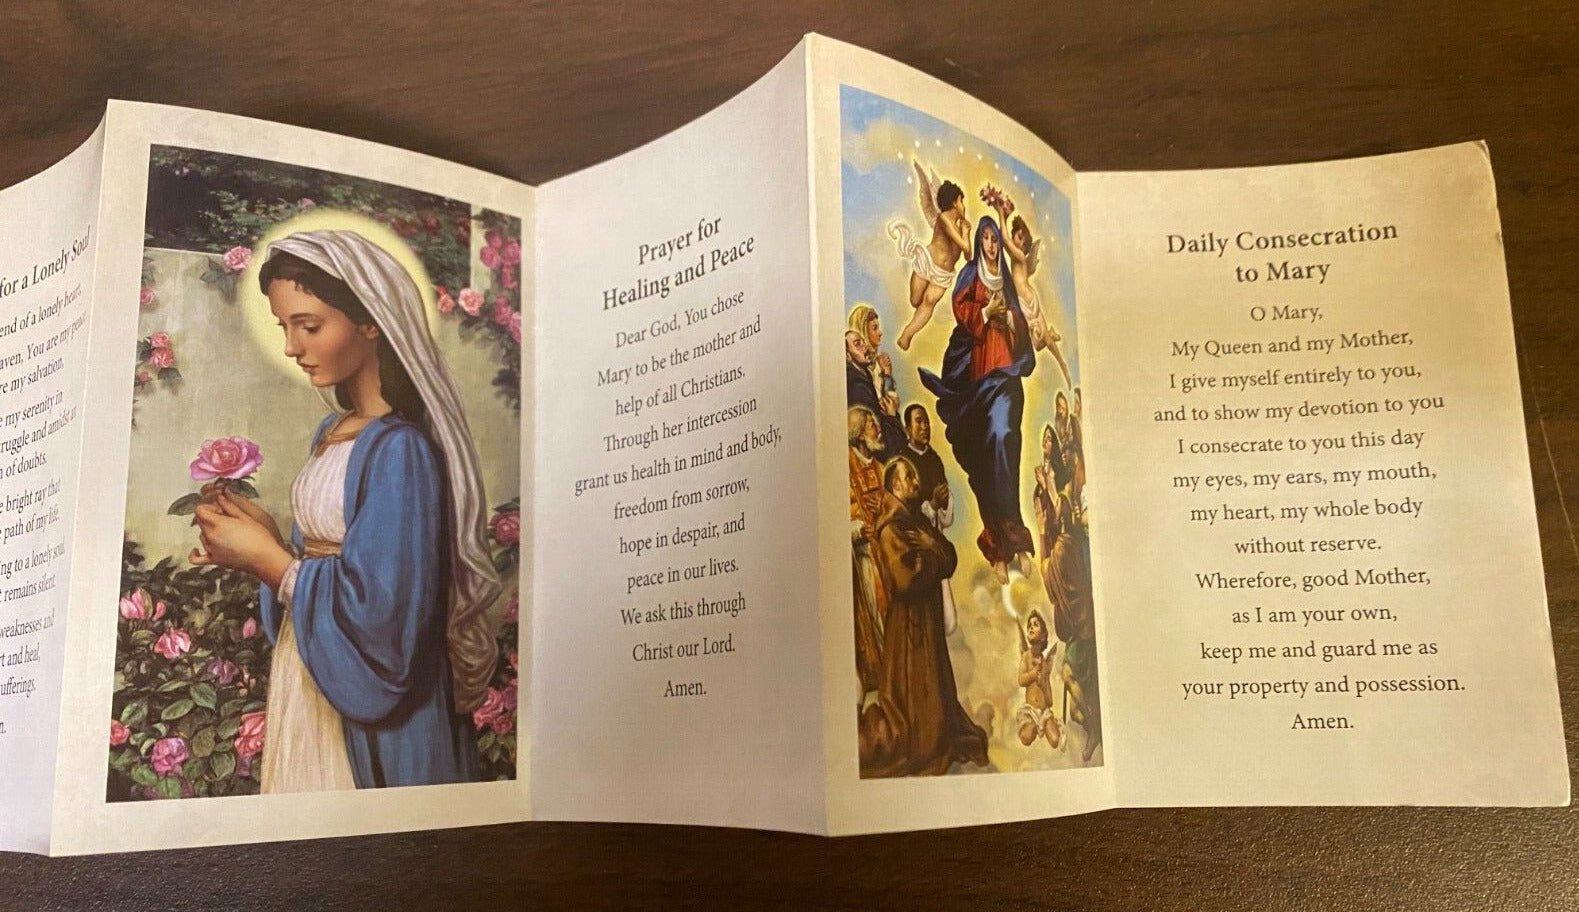 Healing Prayers Pocket Folder, New - Bob and Penny Lord